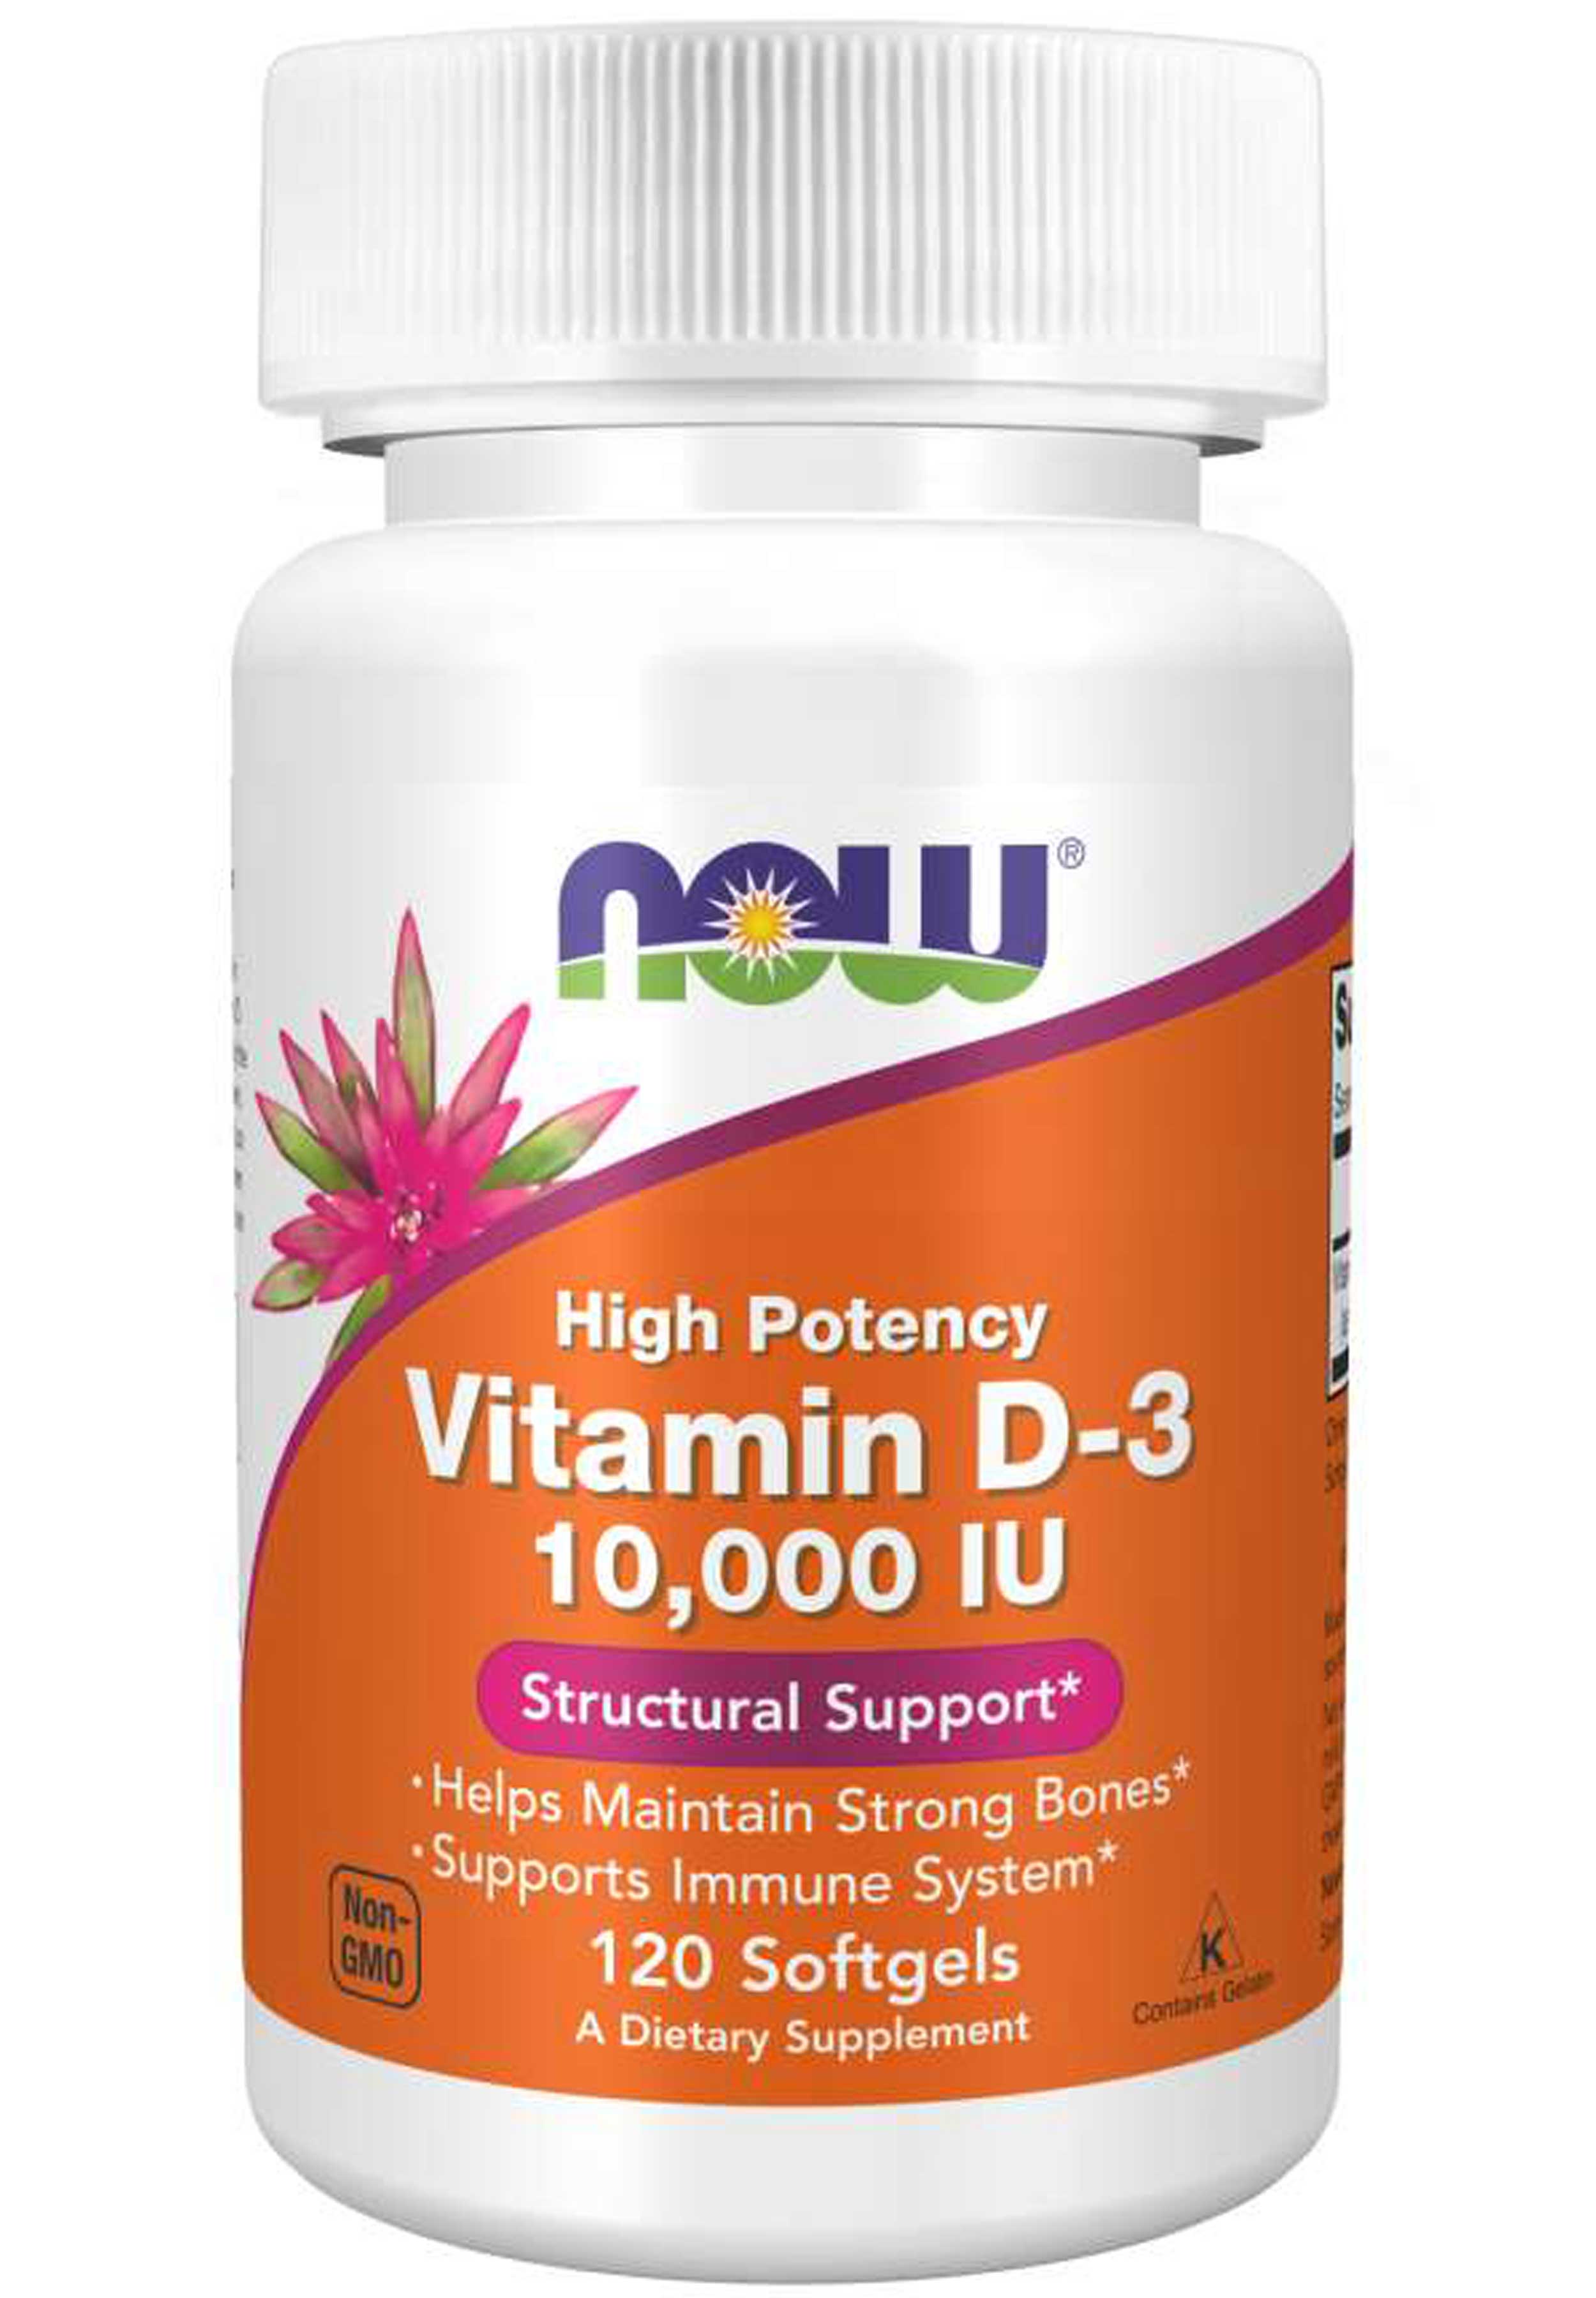 NOW Vitamin D-3 10,000 IU High Potency